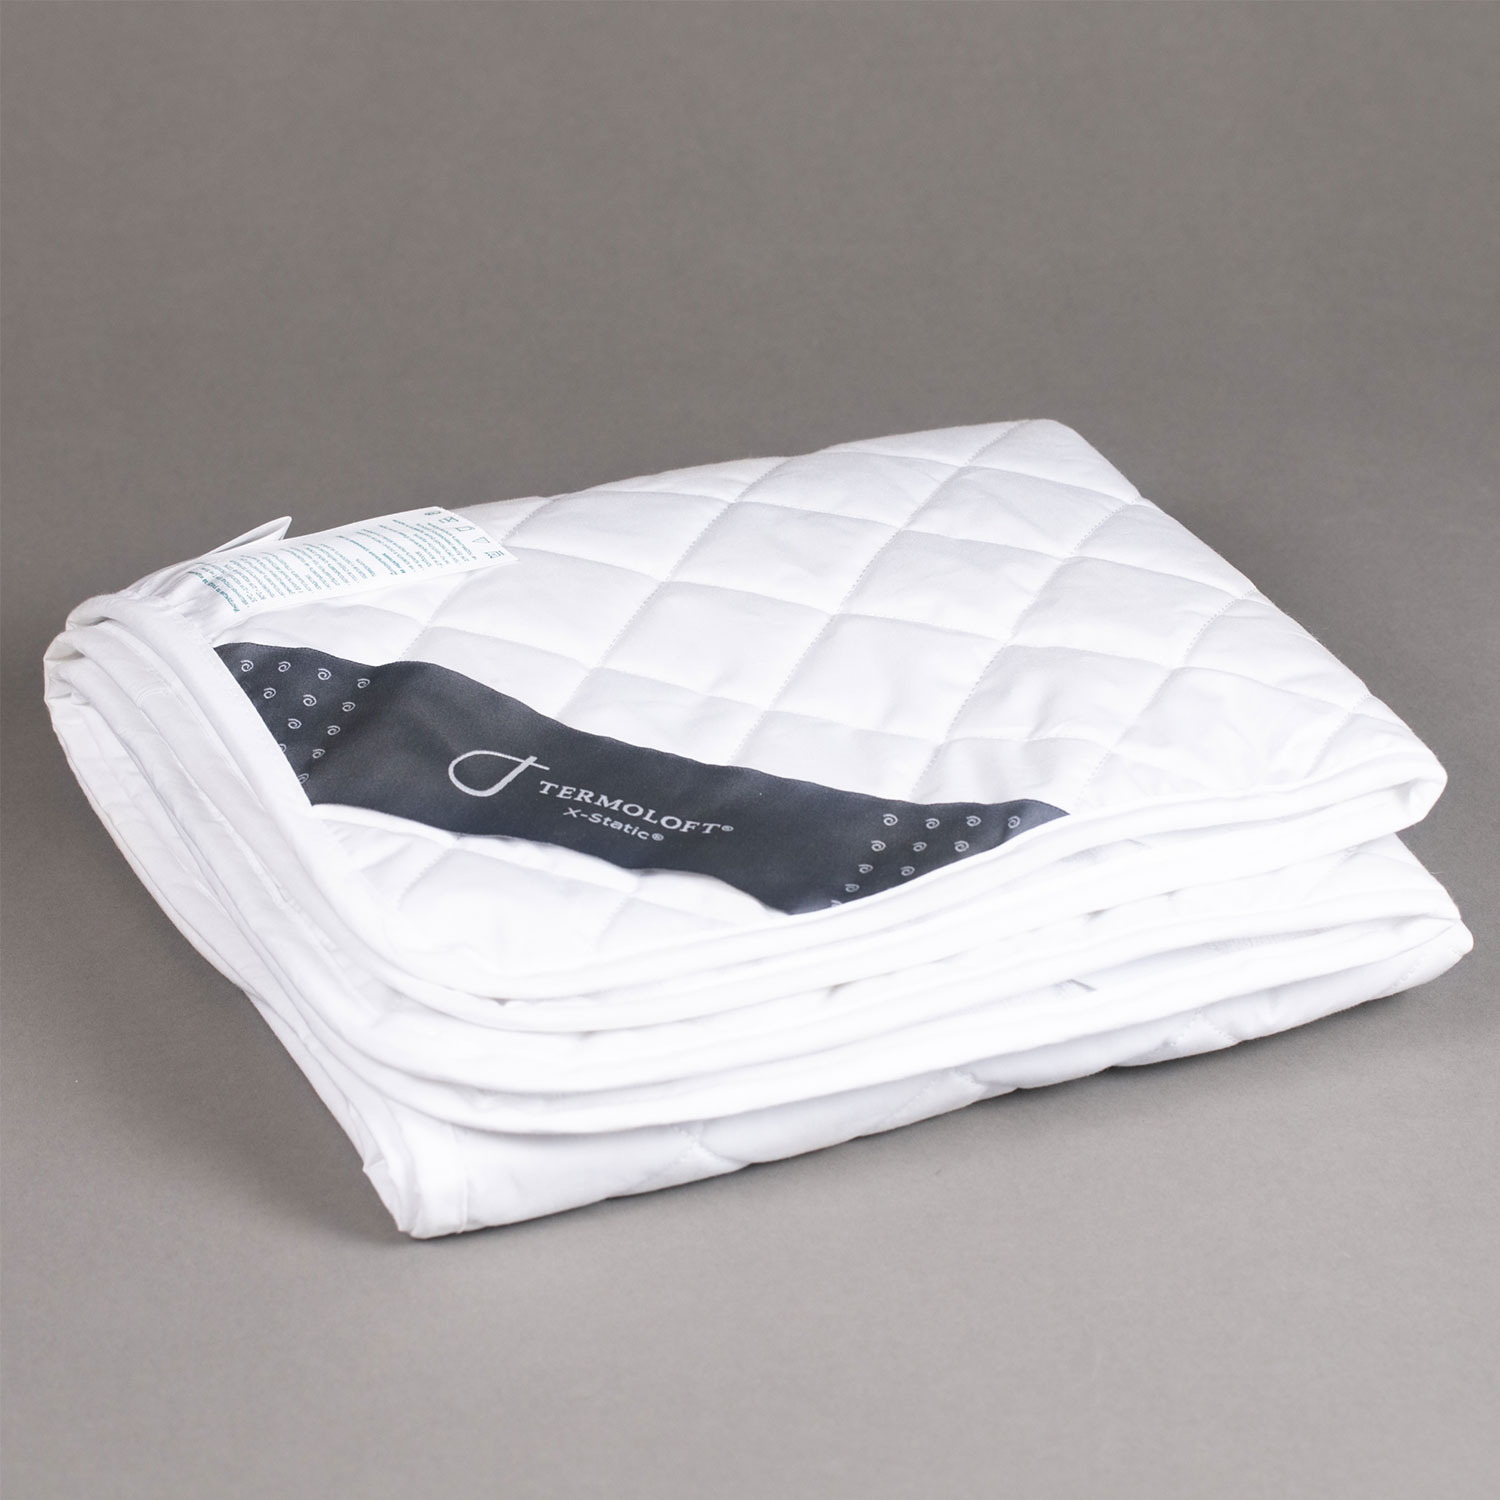 Комплект Одеяло Termoloft x-static 100х135 см +детская подушка 40х60 +детский наматрасник 60х120, цвет белый - фото 2